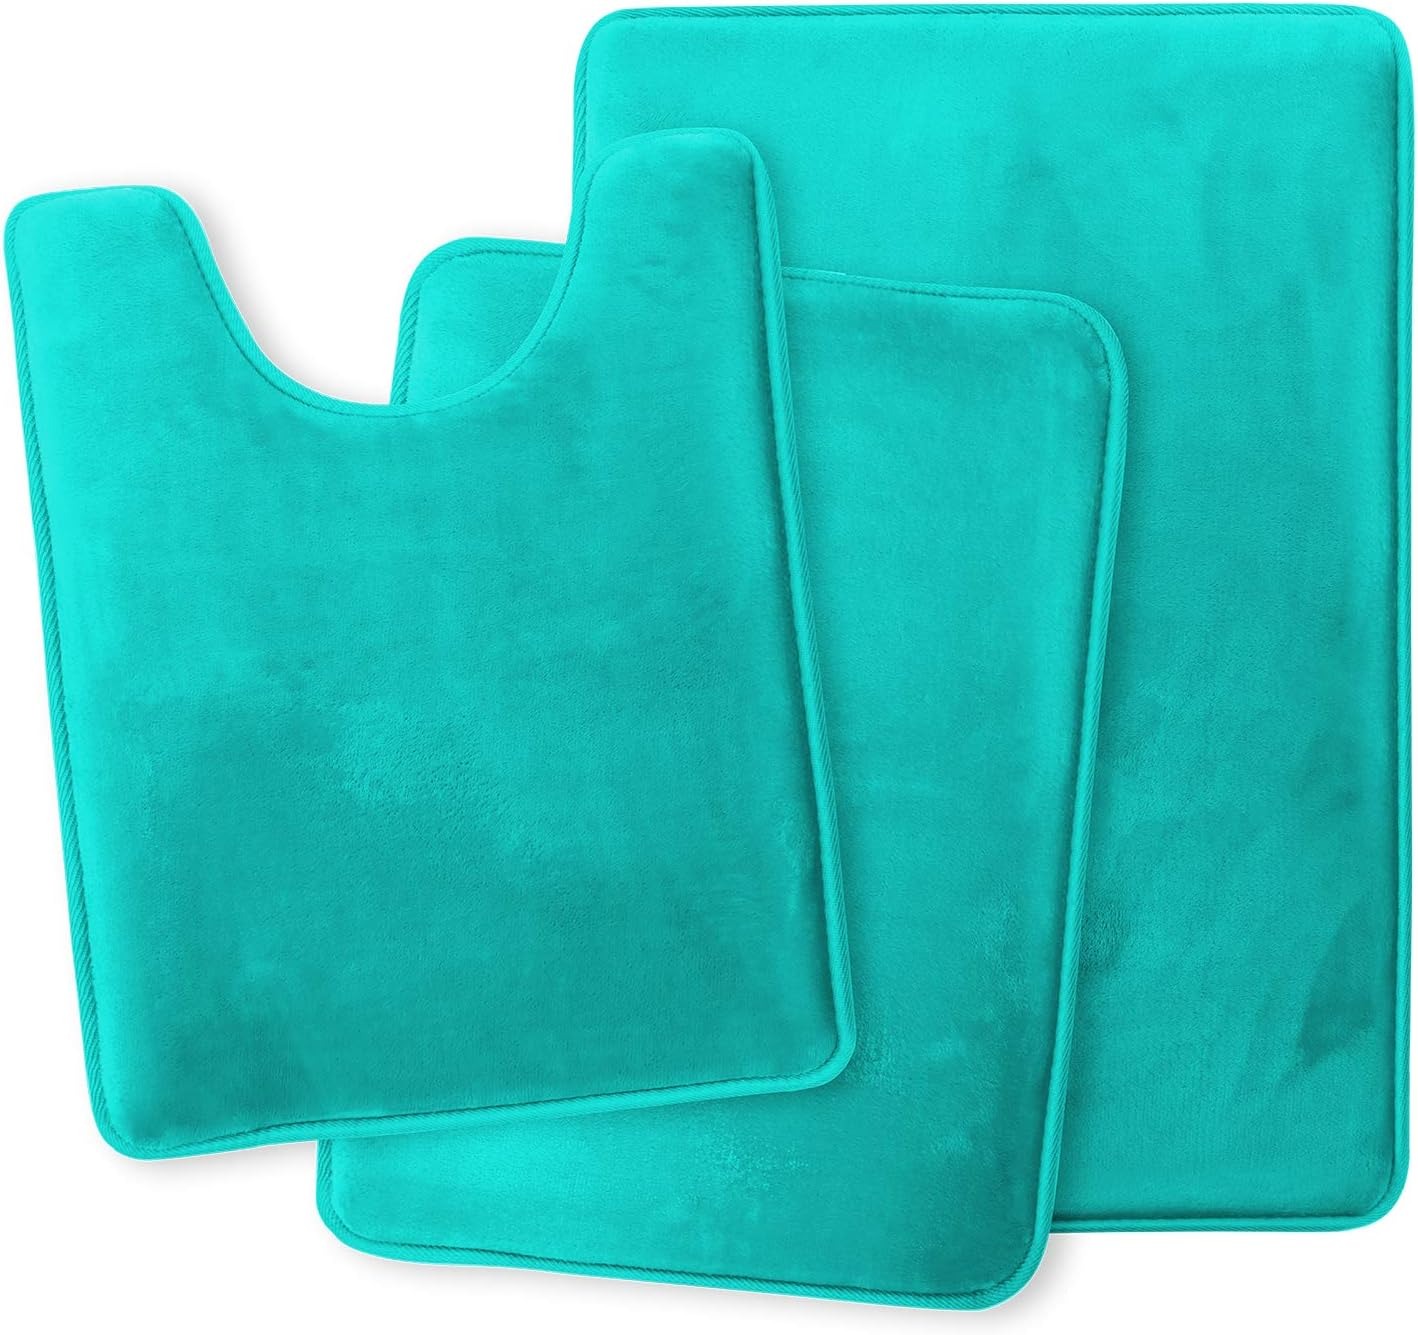 3 Pcs Memory Foam Bathroom Mat – Non-Slip Rugs